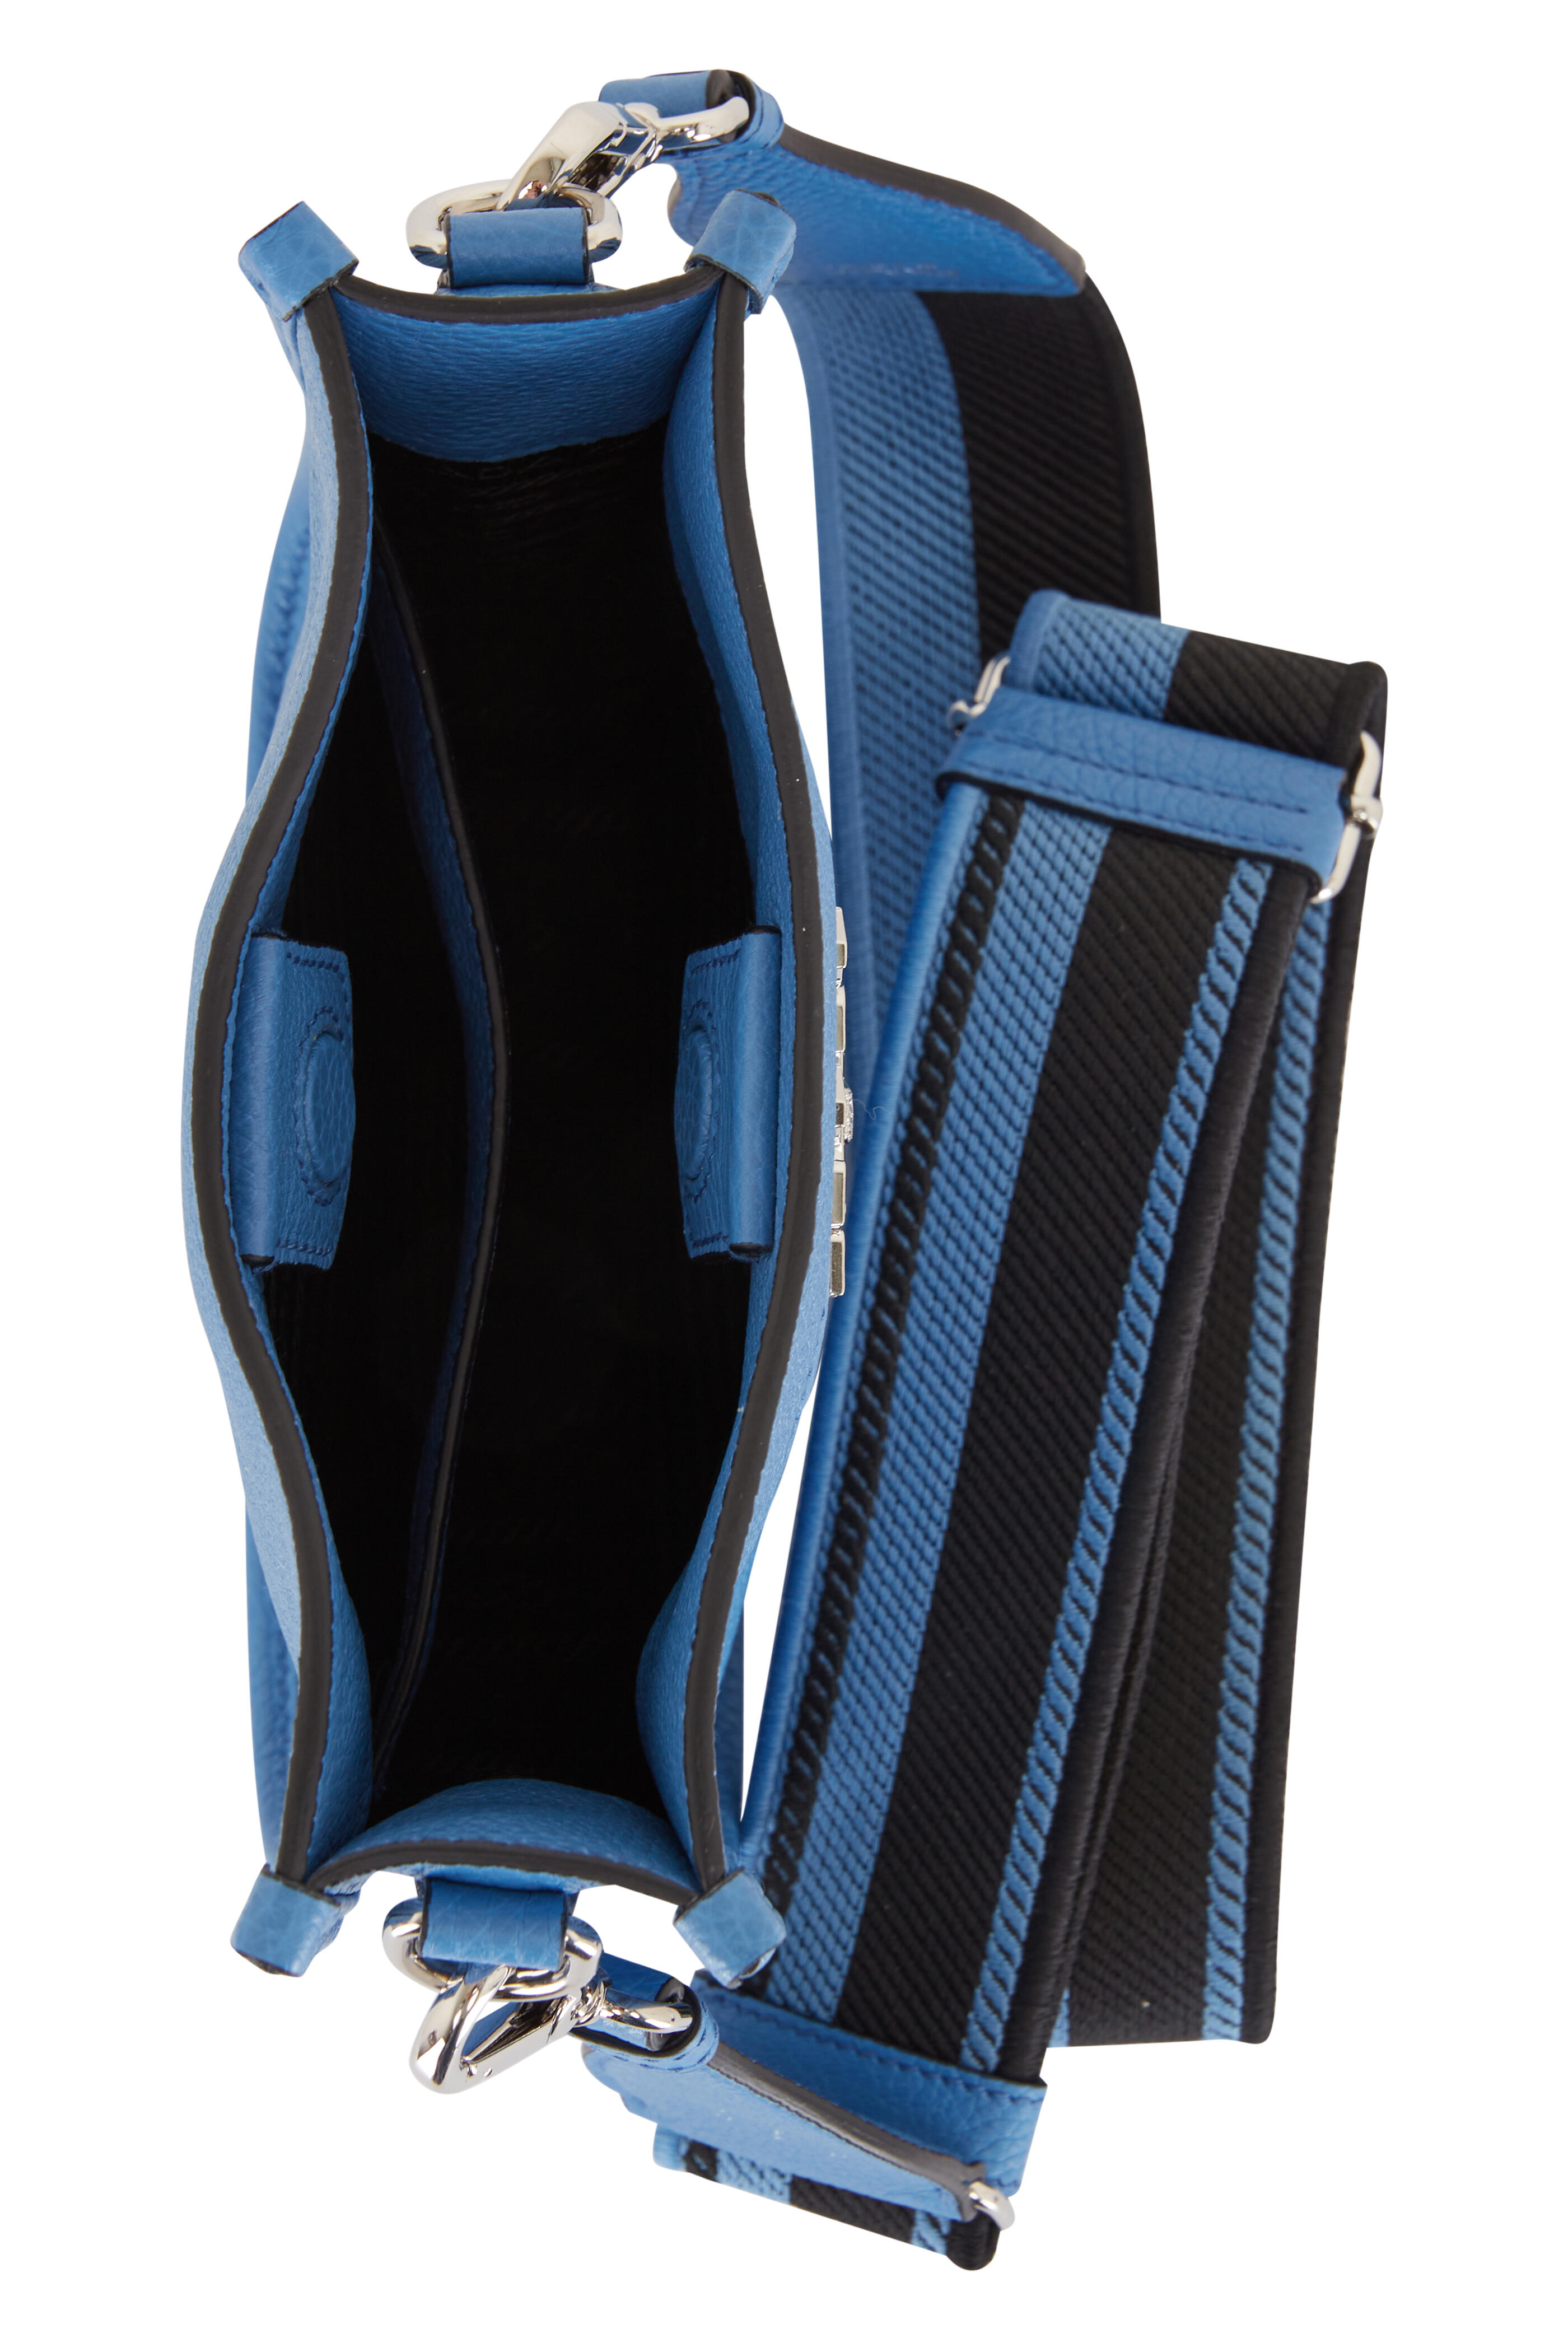 Prada - Flou Blue Leather Mini Shoulder Bag